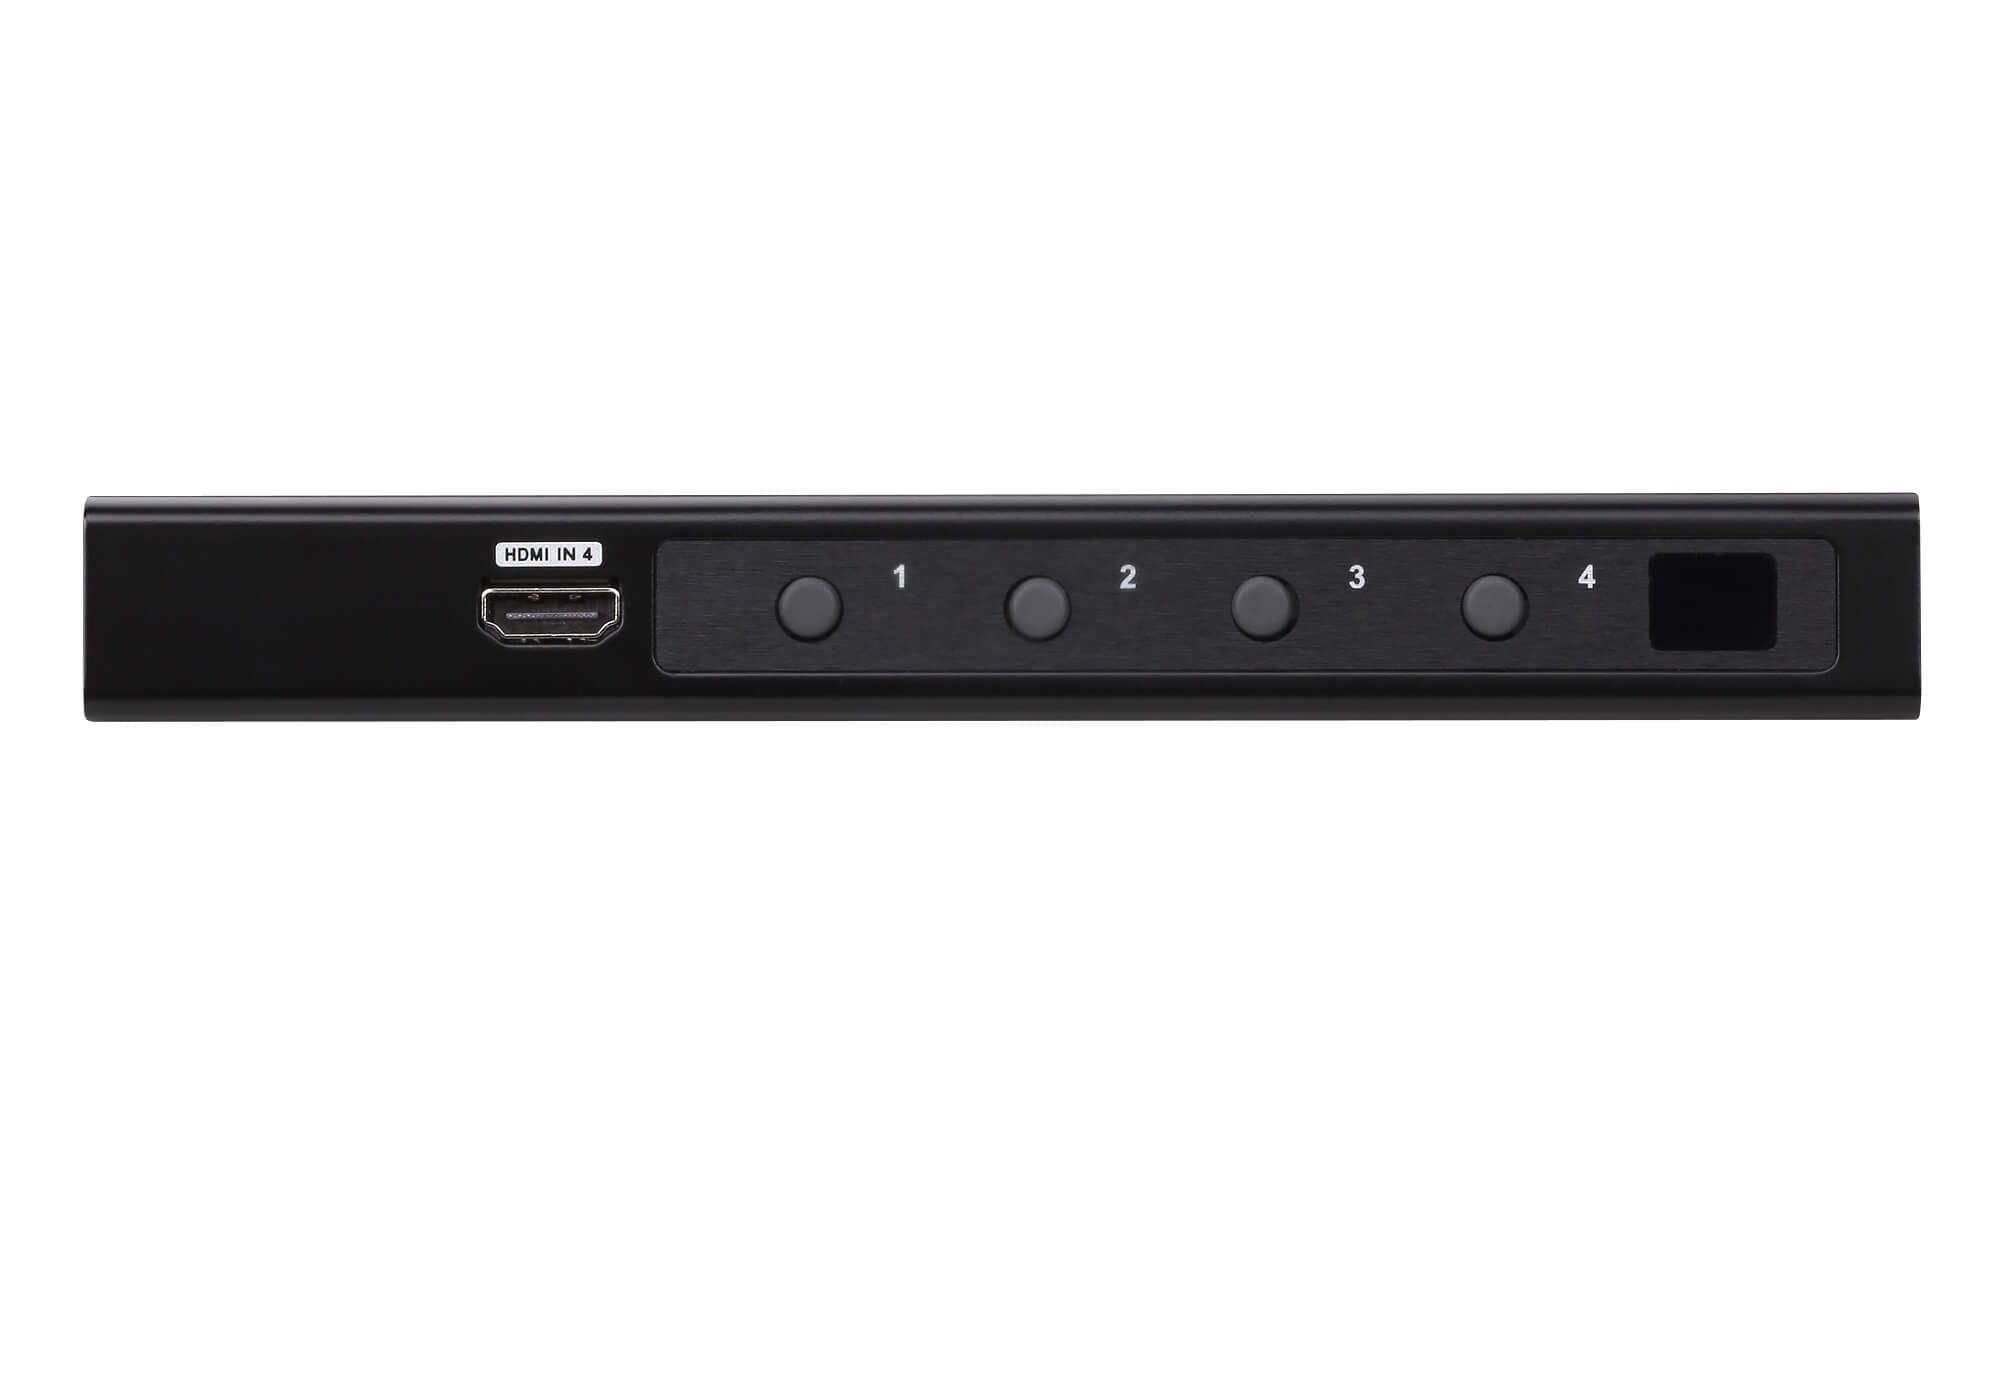 Aten Switch, True 4K, HDMI, 4 Port - VS481C